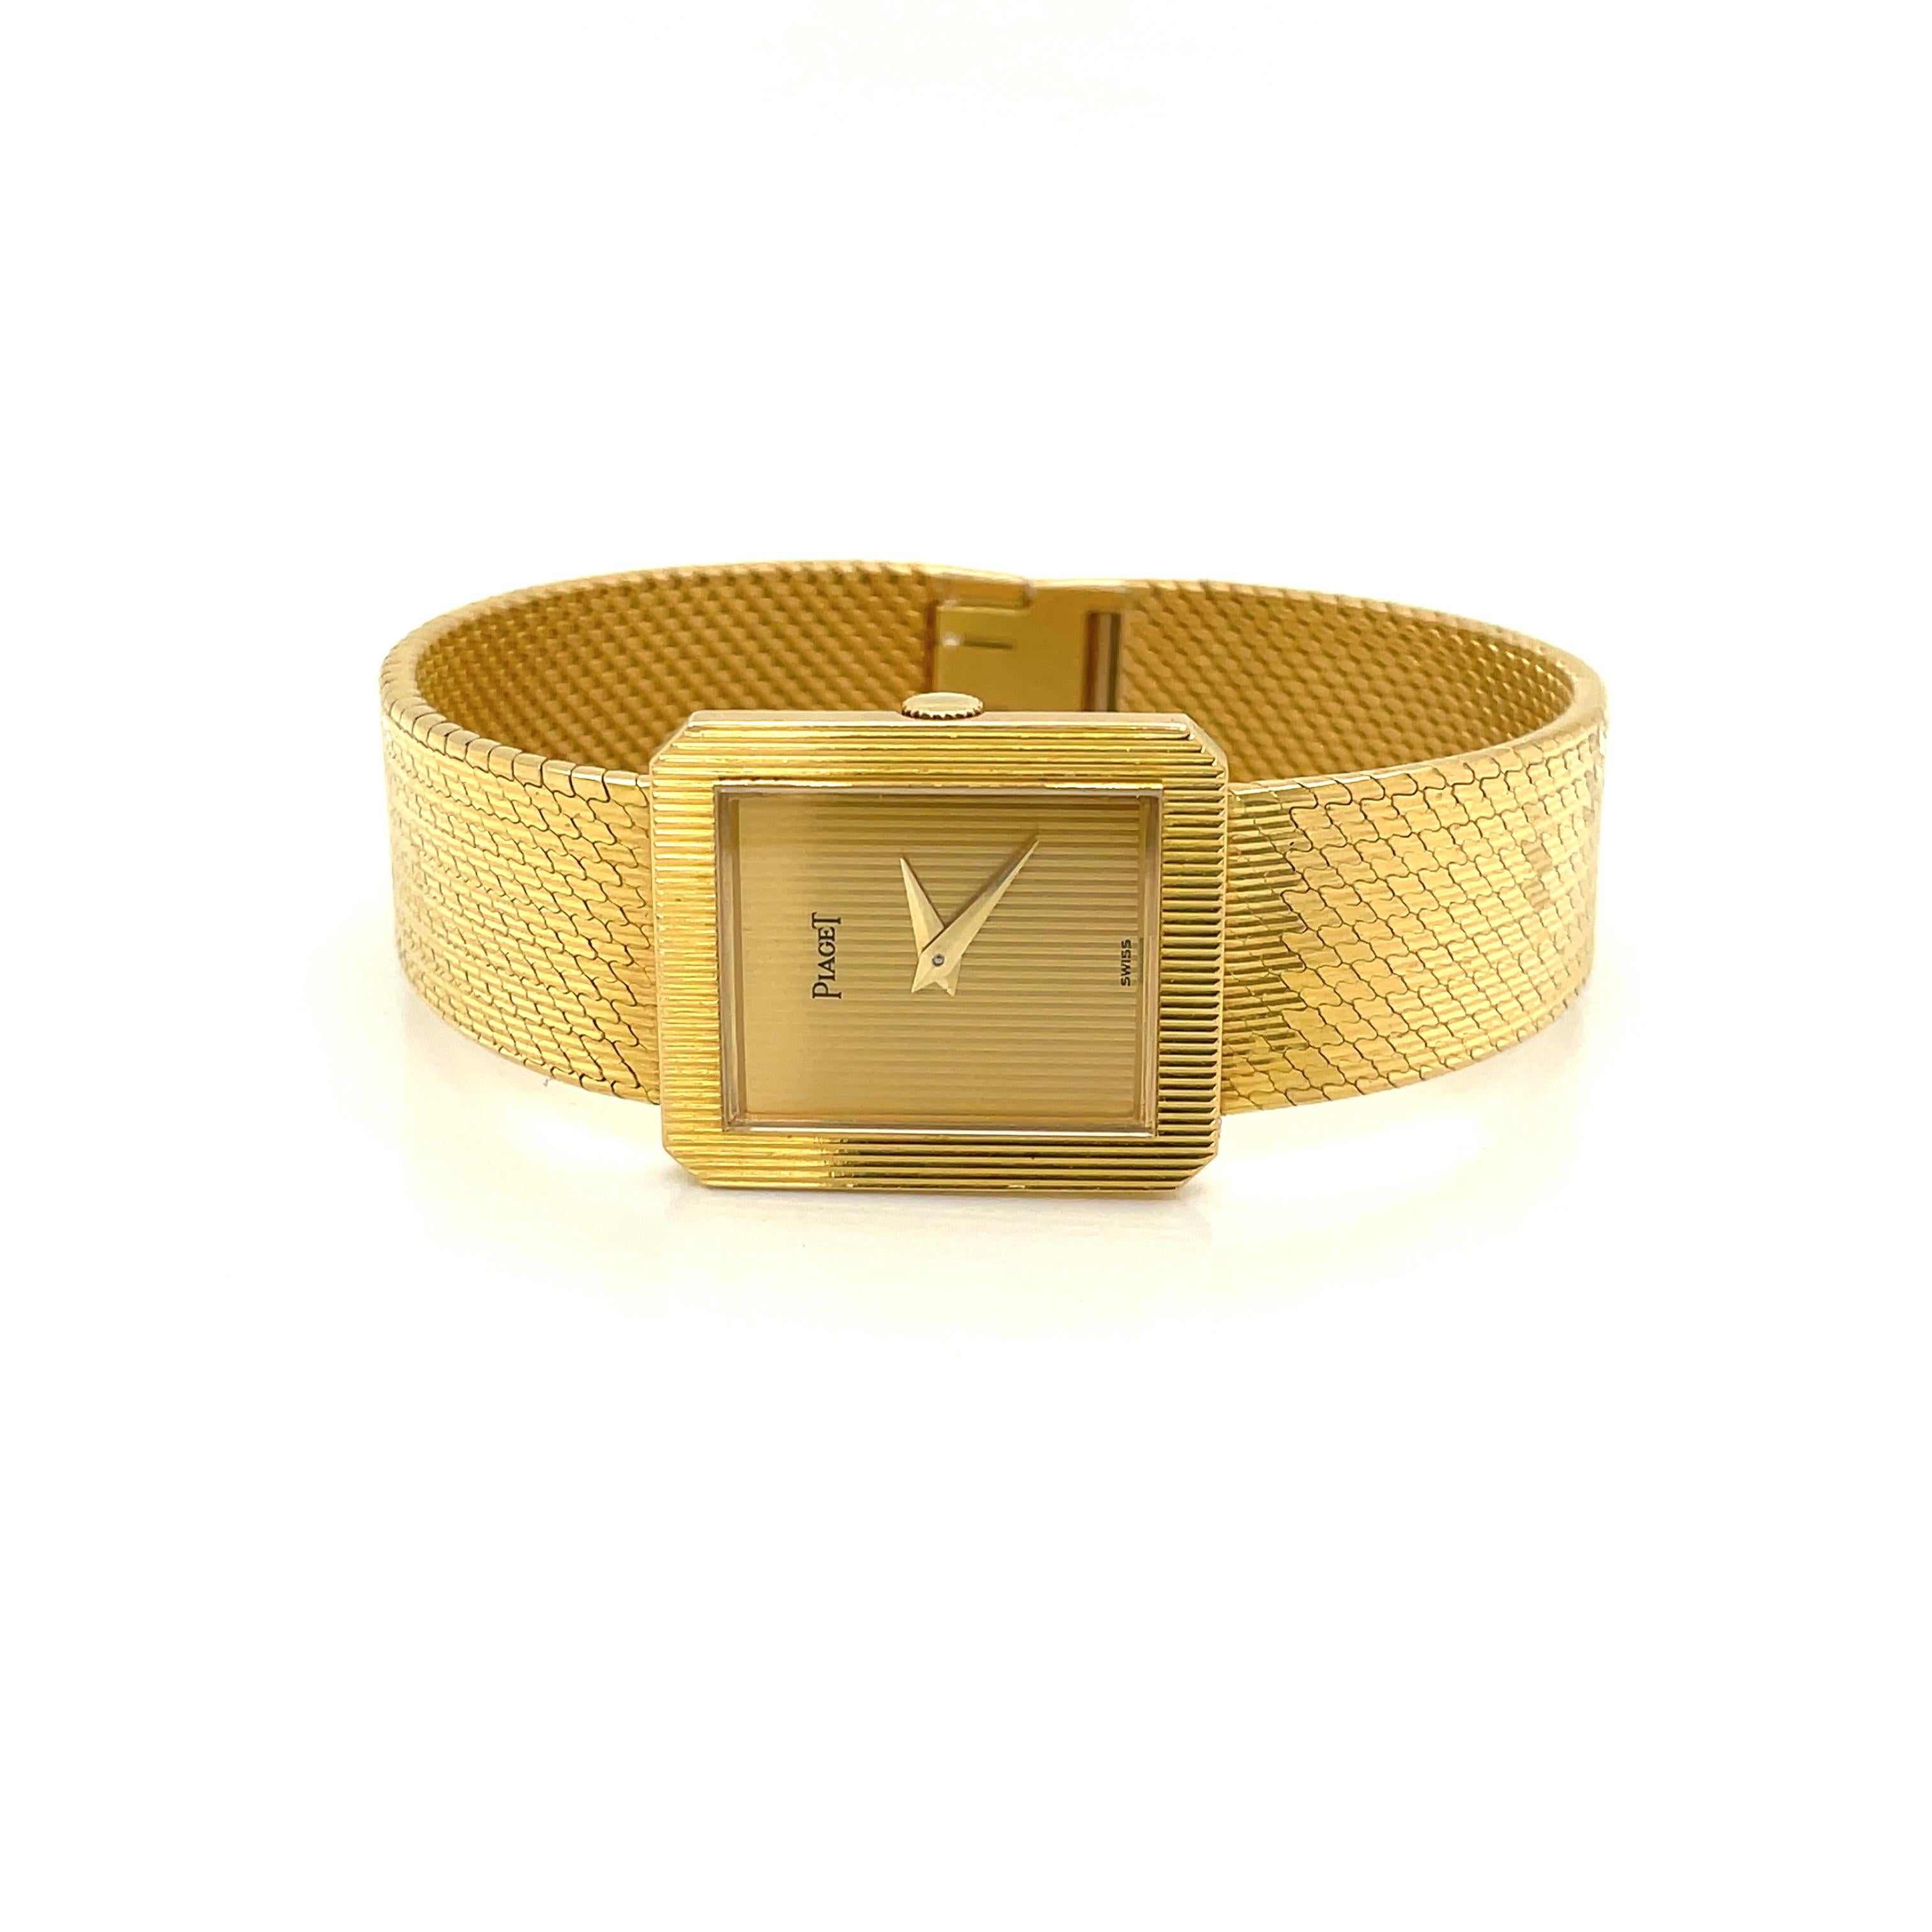 Piaget Protocol 18 Karat Gold Womens Bracelet Wrist Watch 6